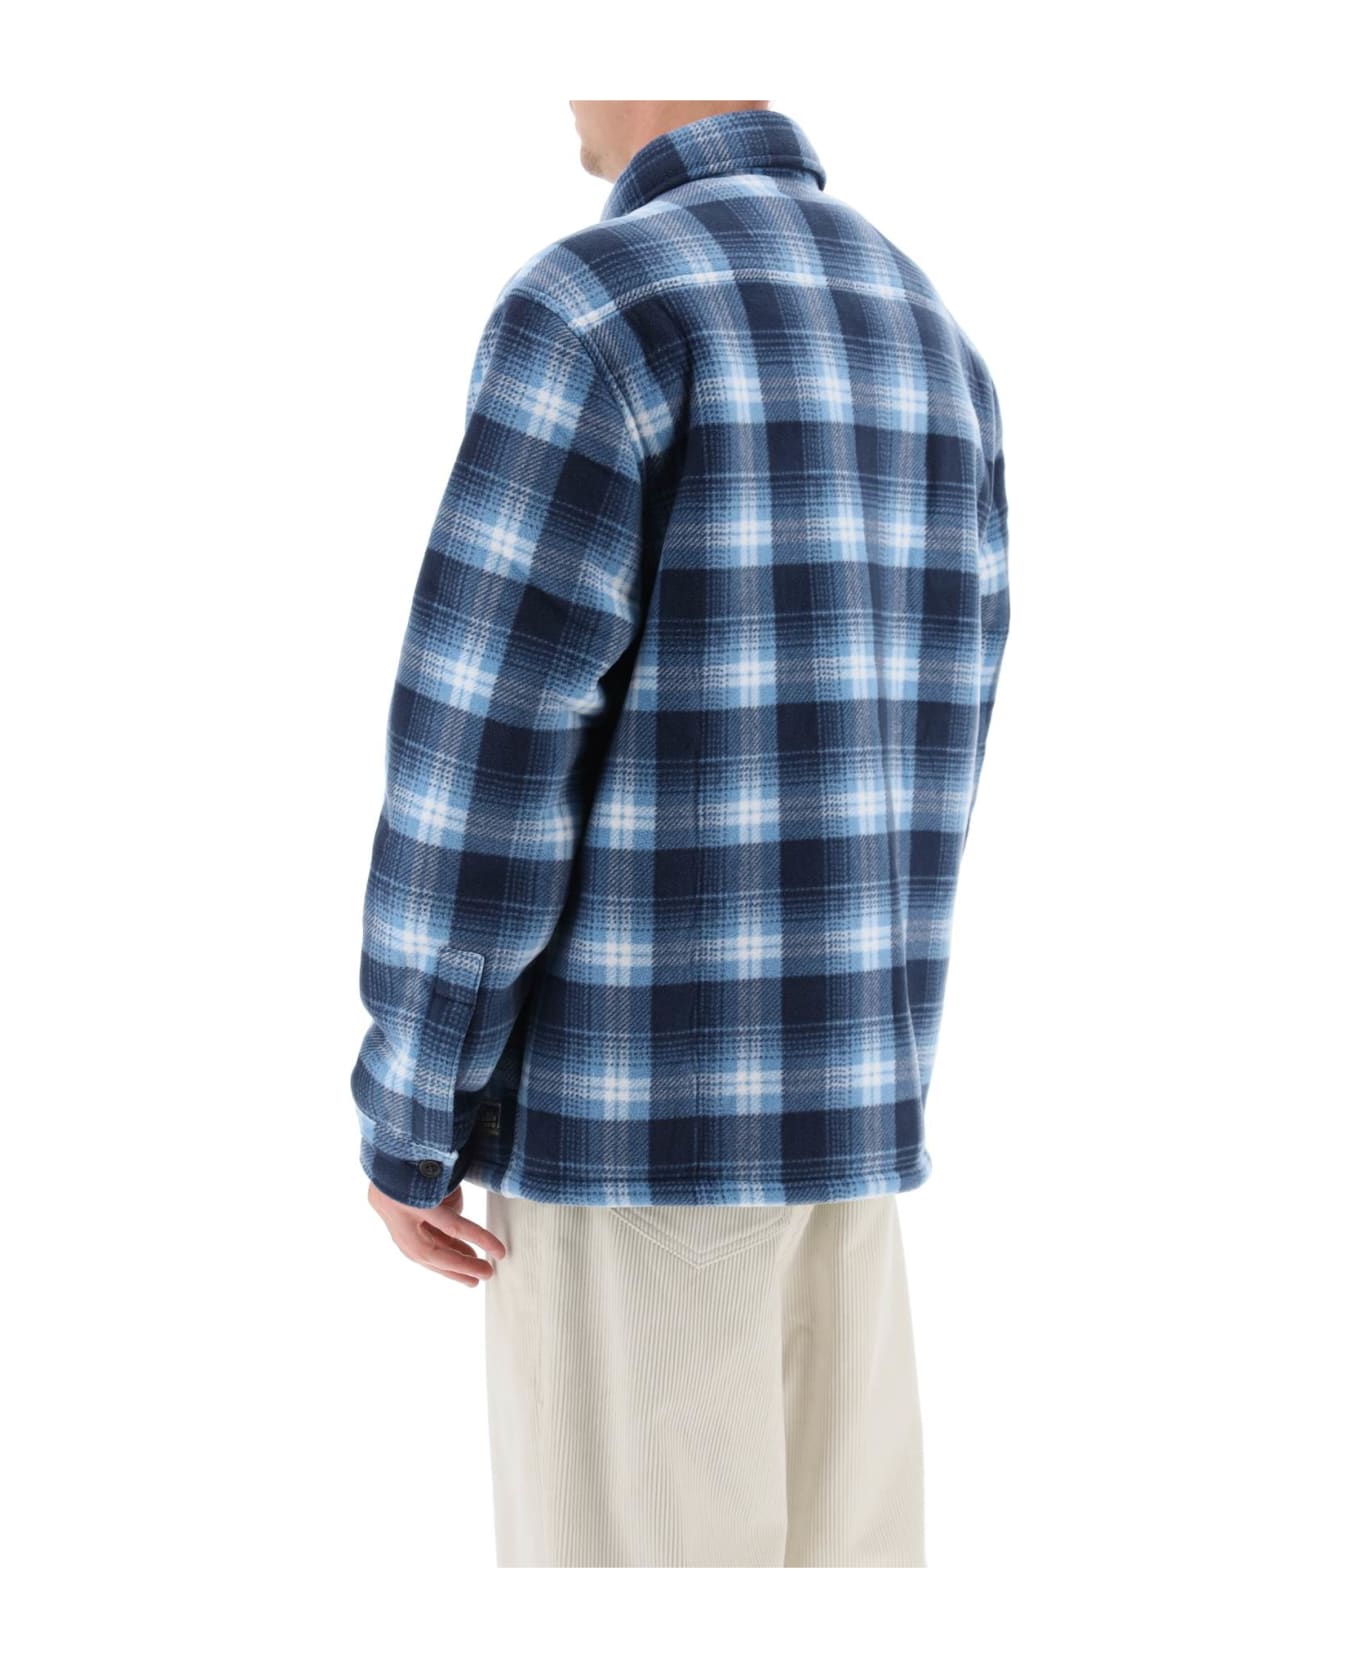 Polo Ralph Lauren Check Shirt Jacket - OUTDOOR OMBRE PLAID (Blue) ブレザー